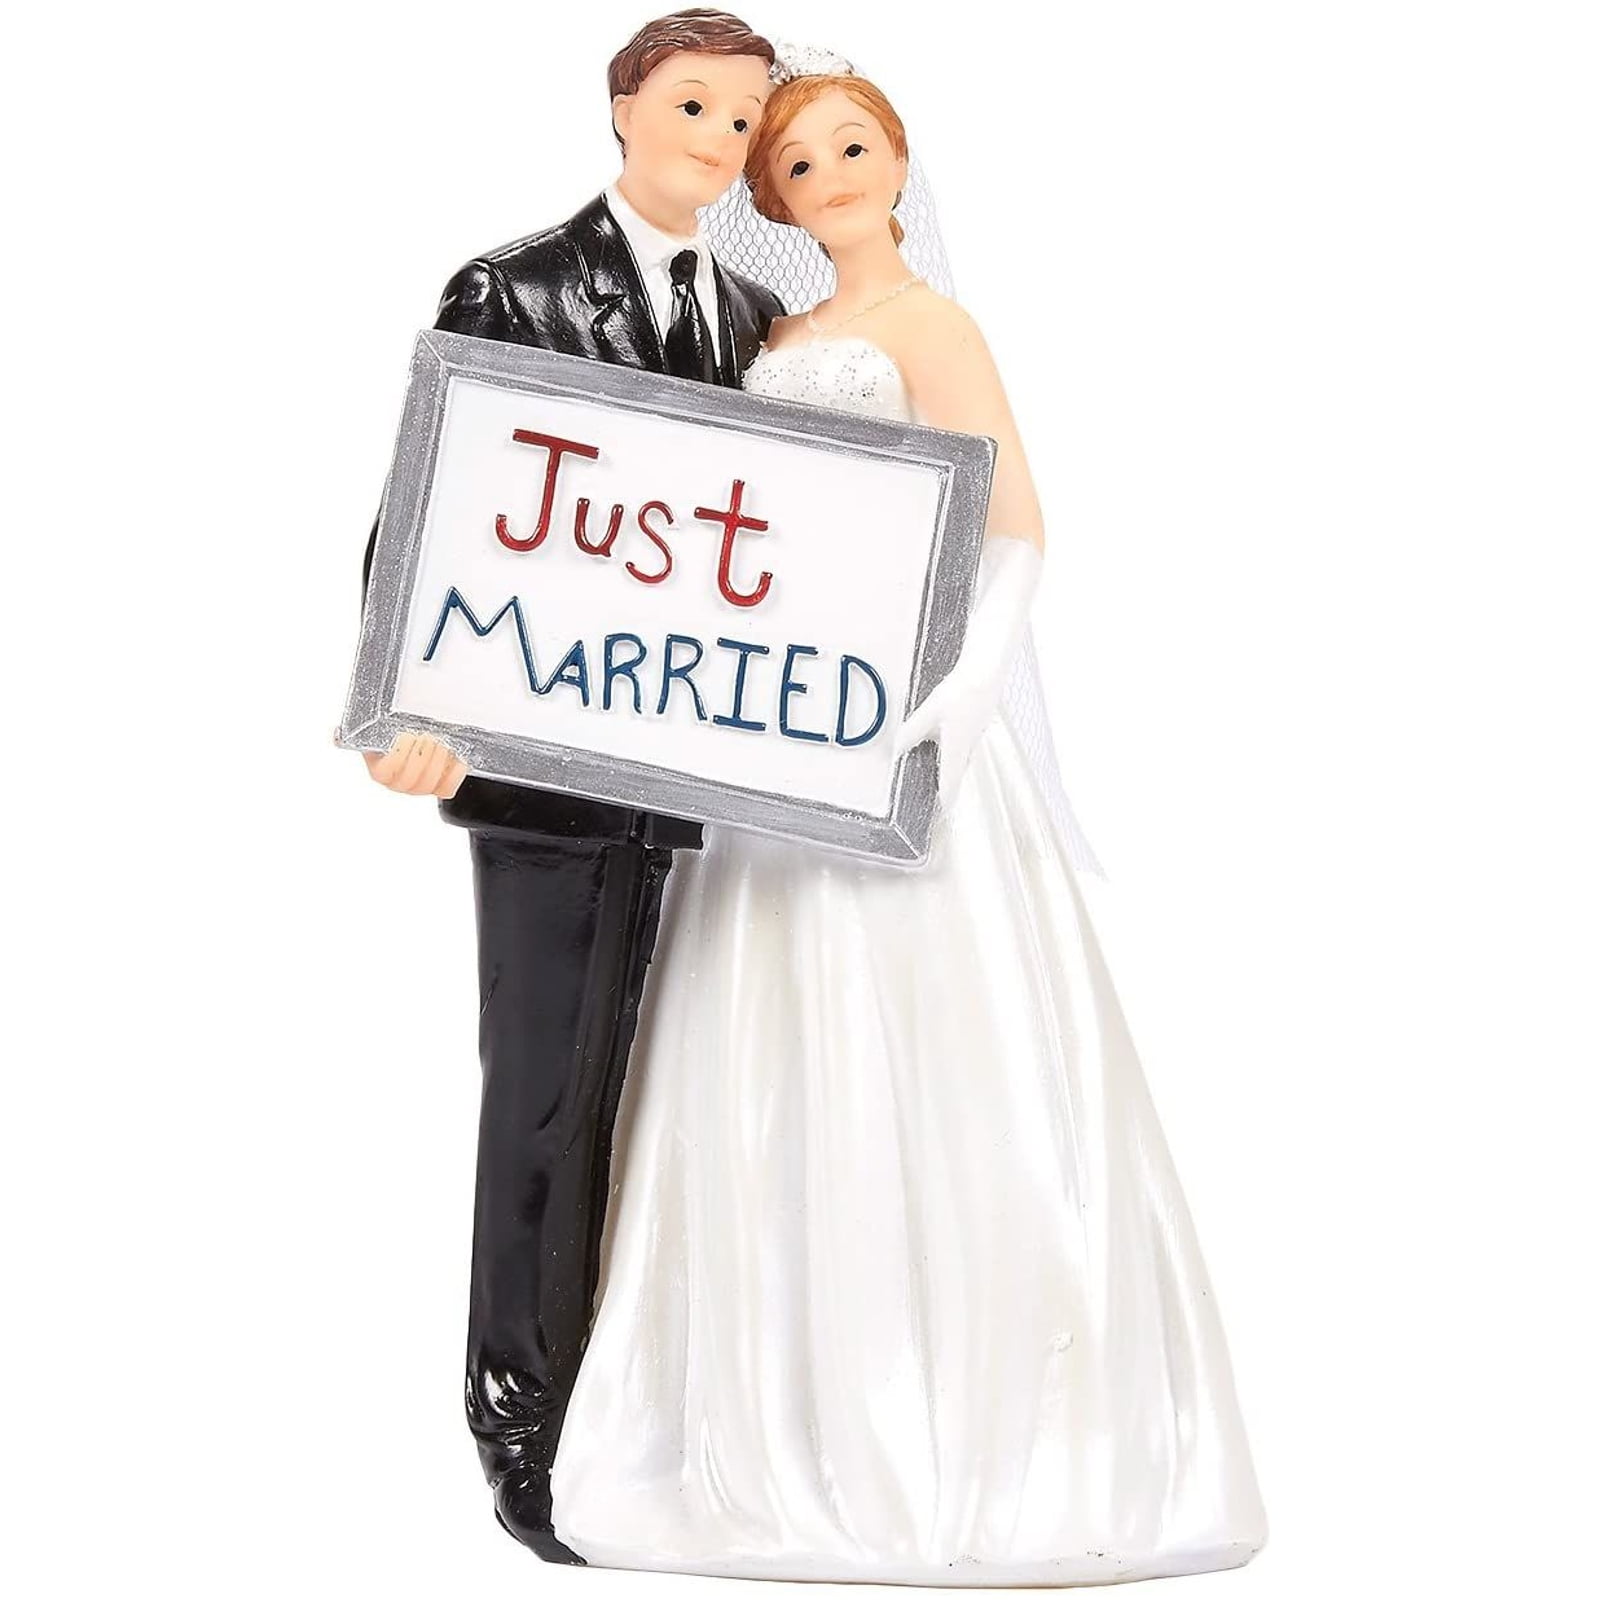 Humor Marriage Funny Polyresin Figurine Wedding Cake Toppers Bride Groom Decor 